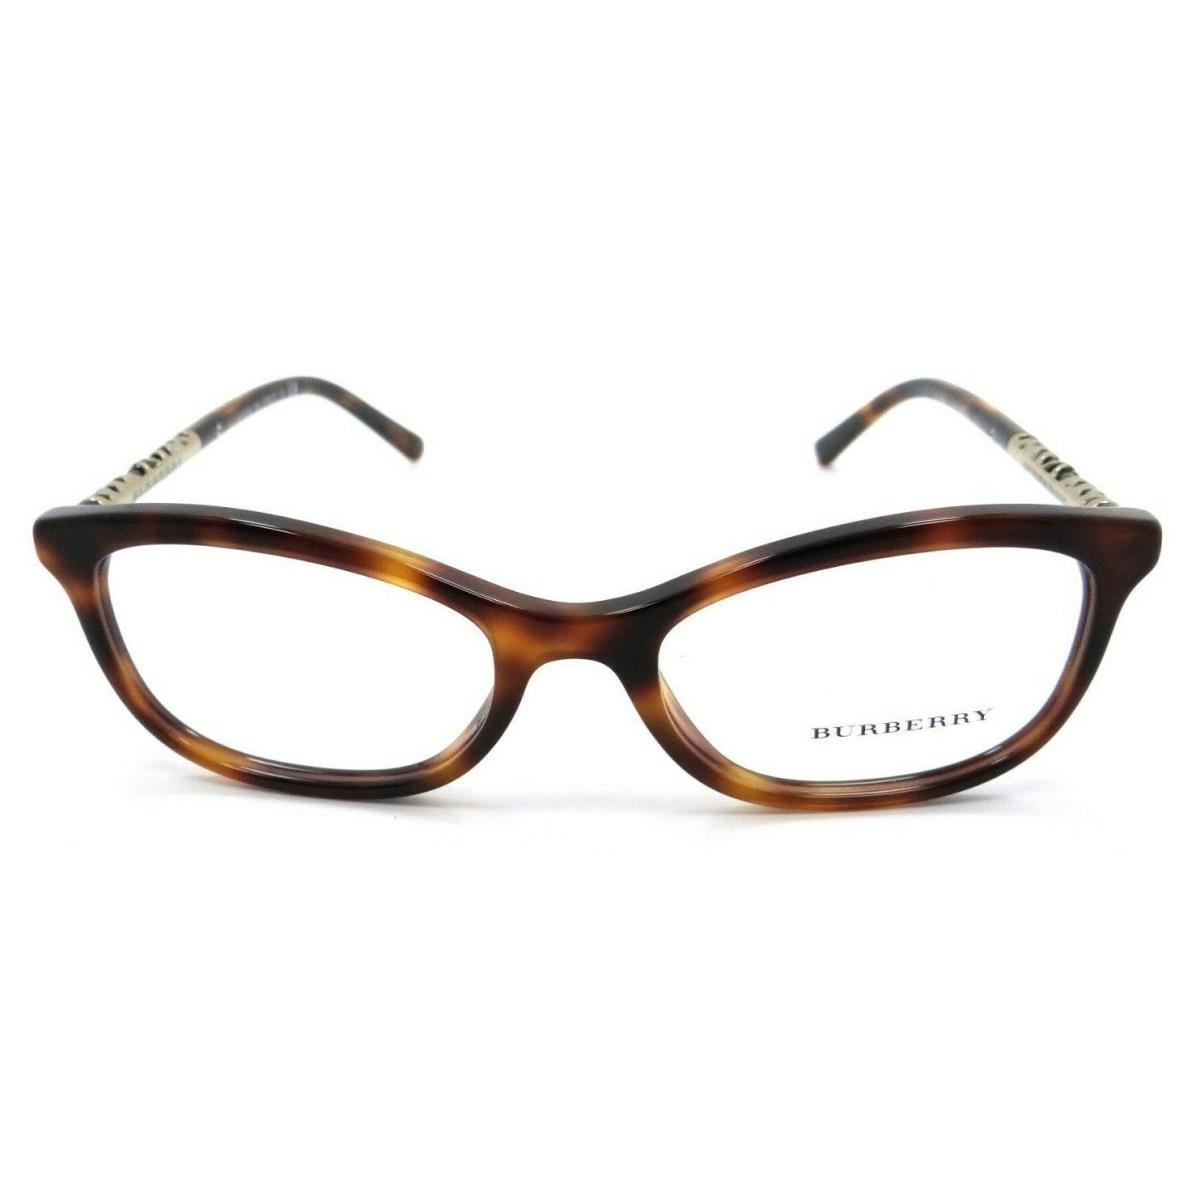 Burberry eyeglasses  - Multi-Color Frame 0